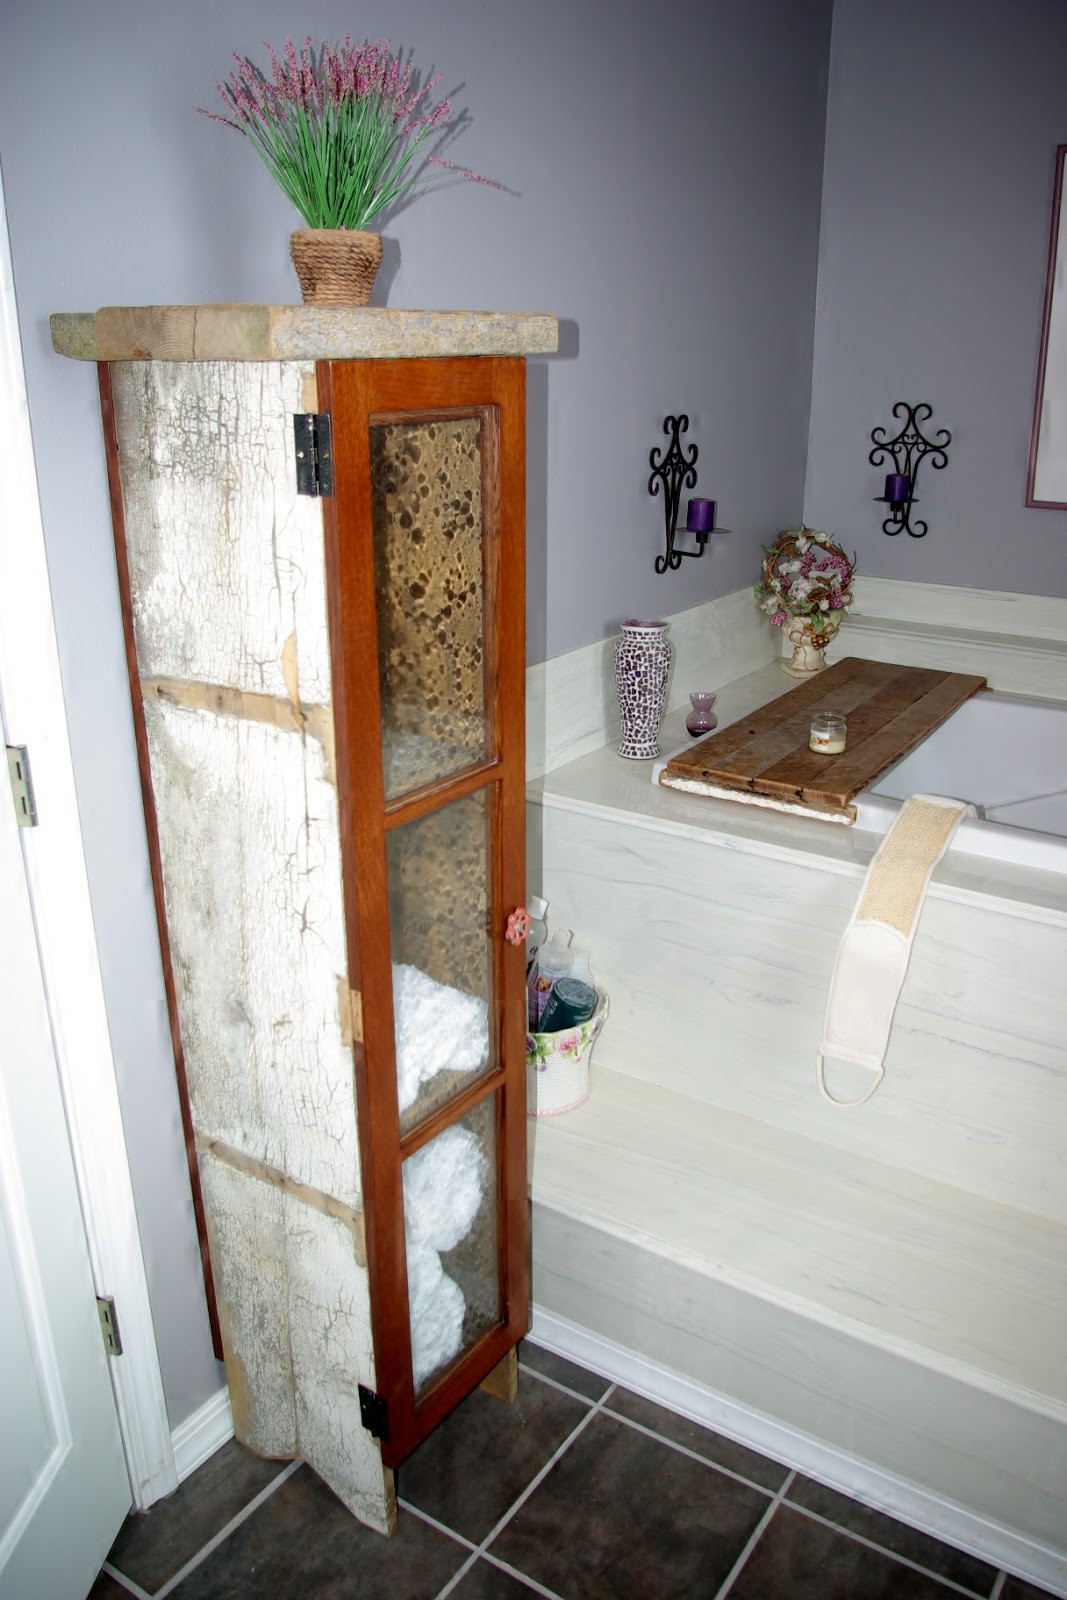 Rustic Bathroom Storage Cabinets
 Reclaimed Rustics Rustic Barn Wood Bath Cabinet